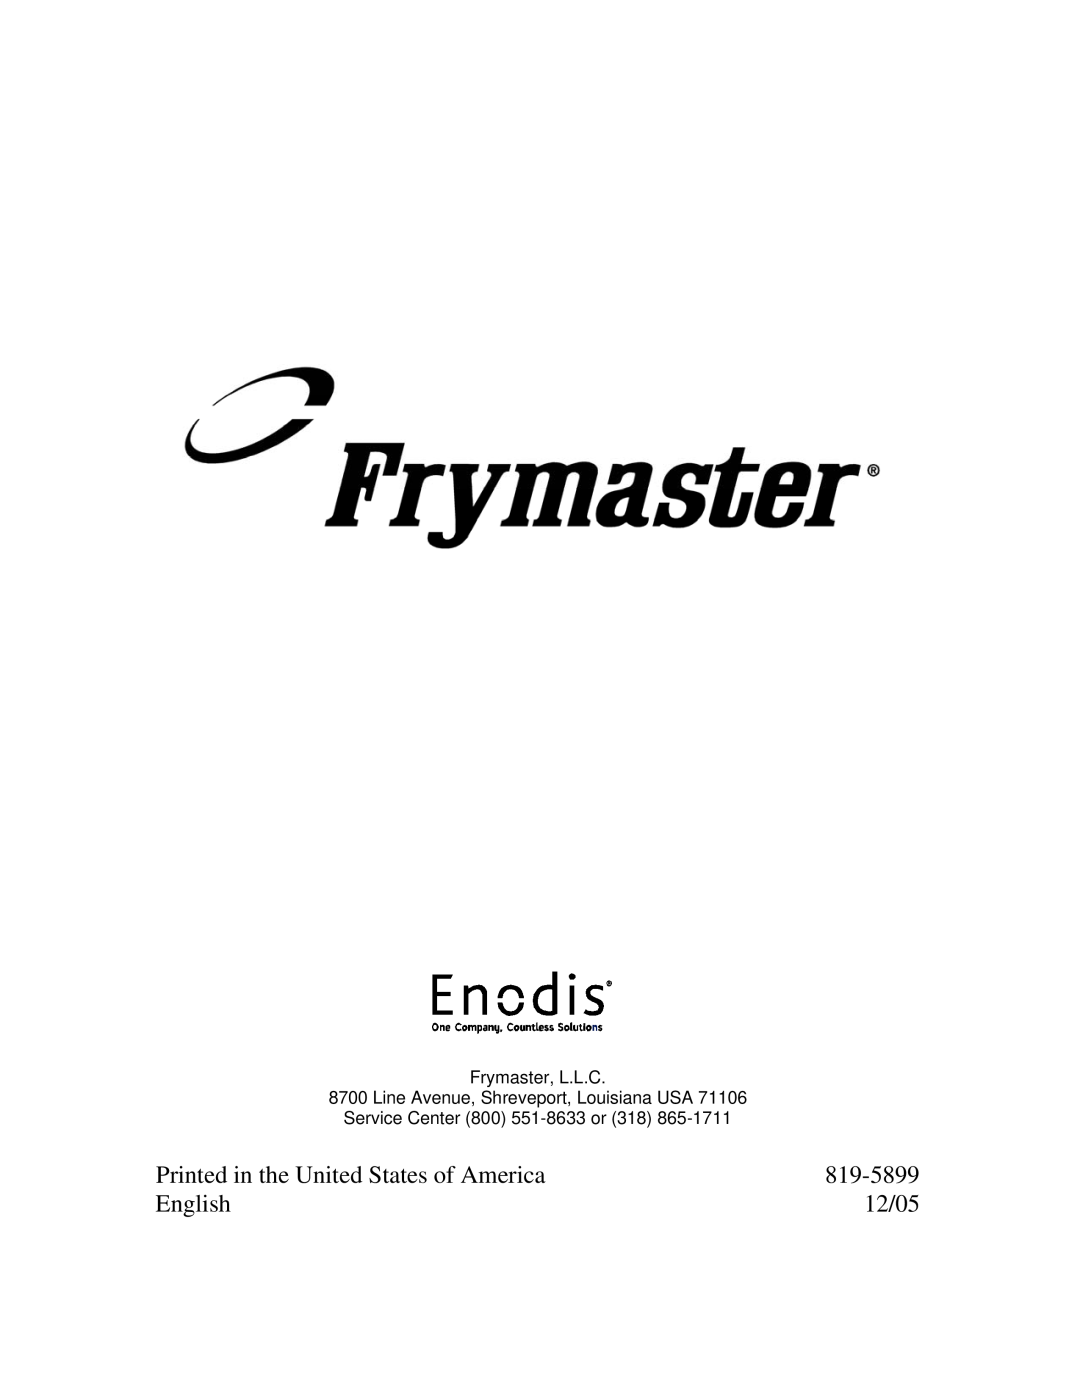 Frymaster cm45 s operation manual 819-5899, English, 12/05, Frymaster, L.L.C 